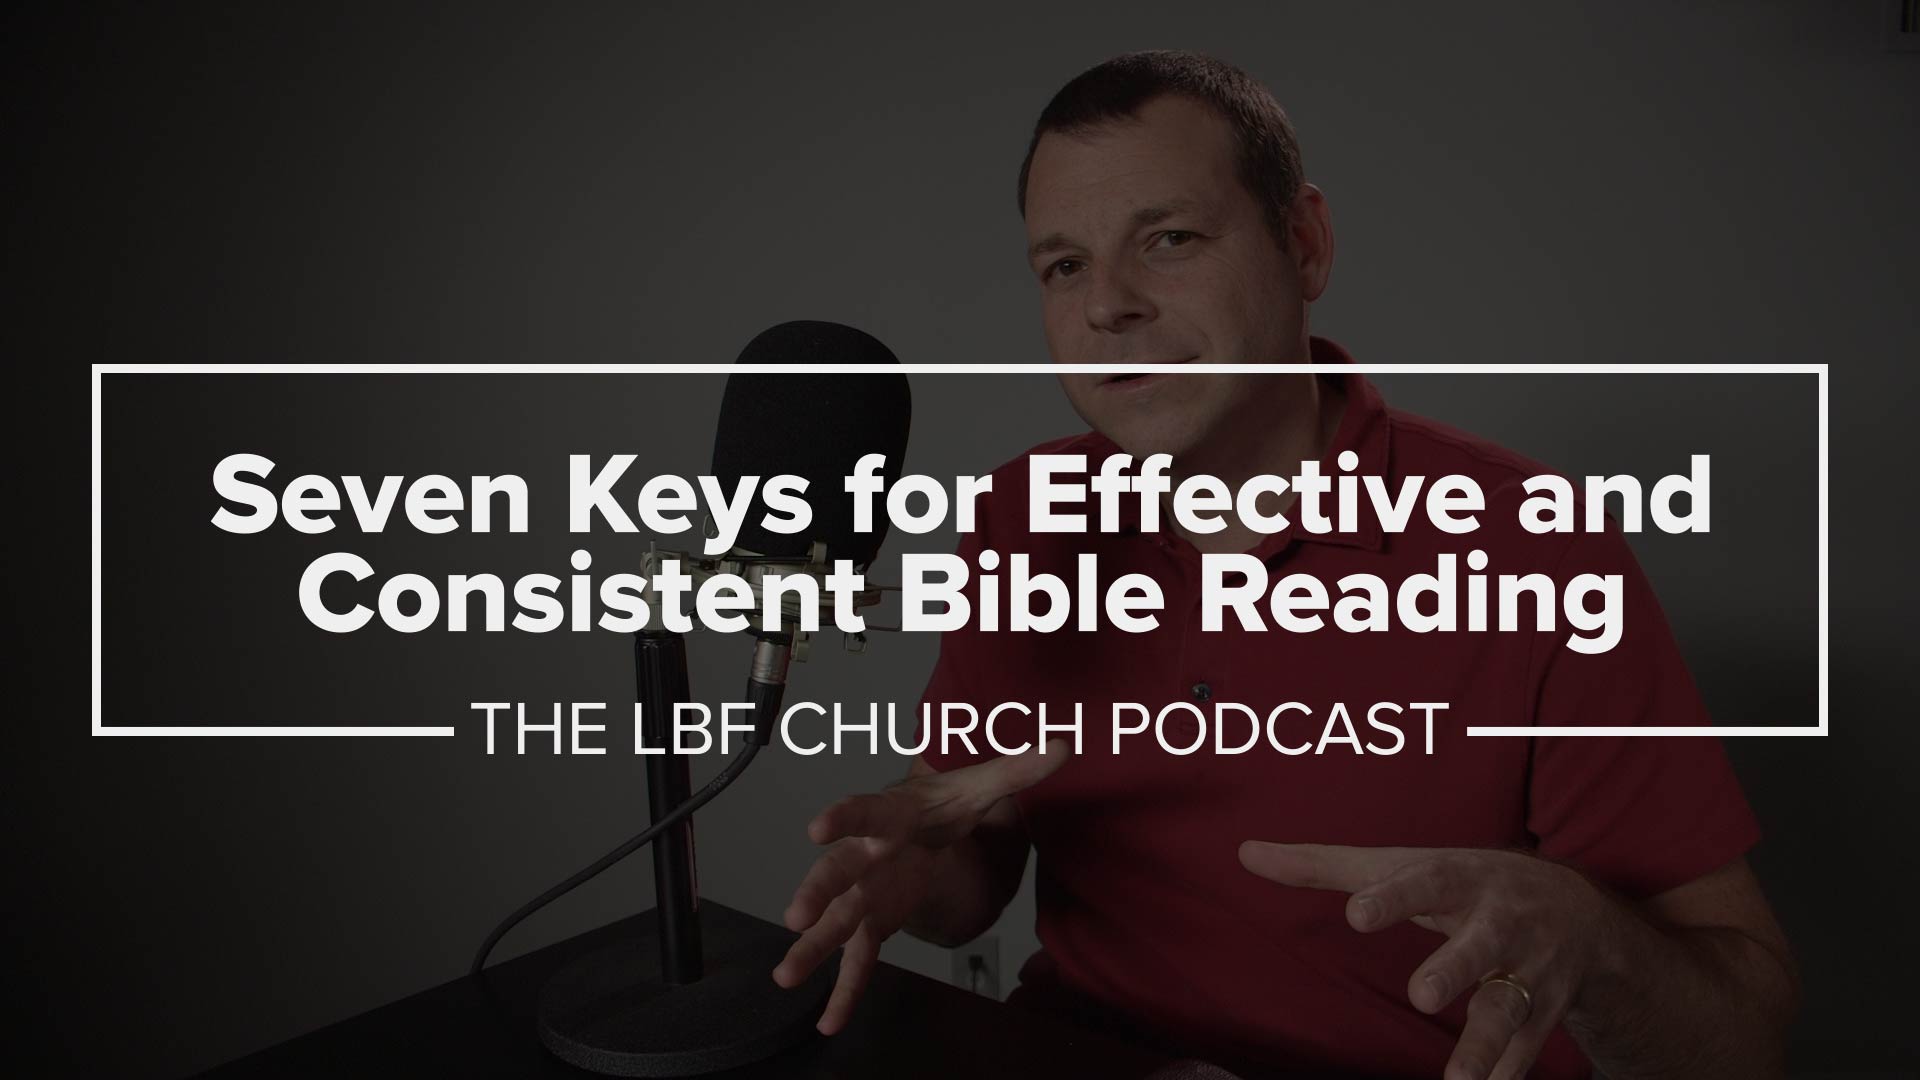 7 Keys for Effective Bible Reading